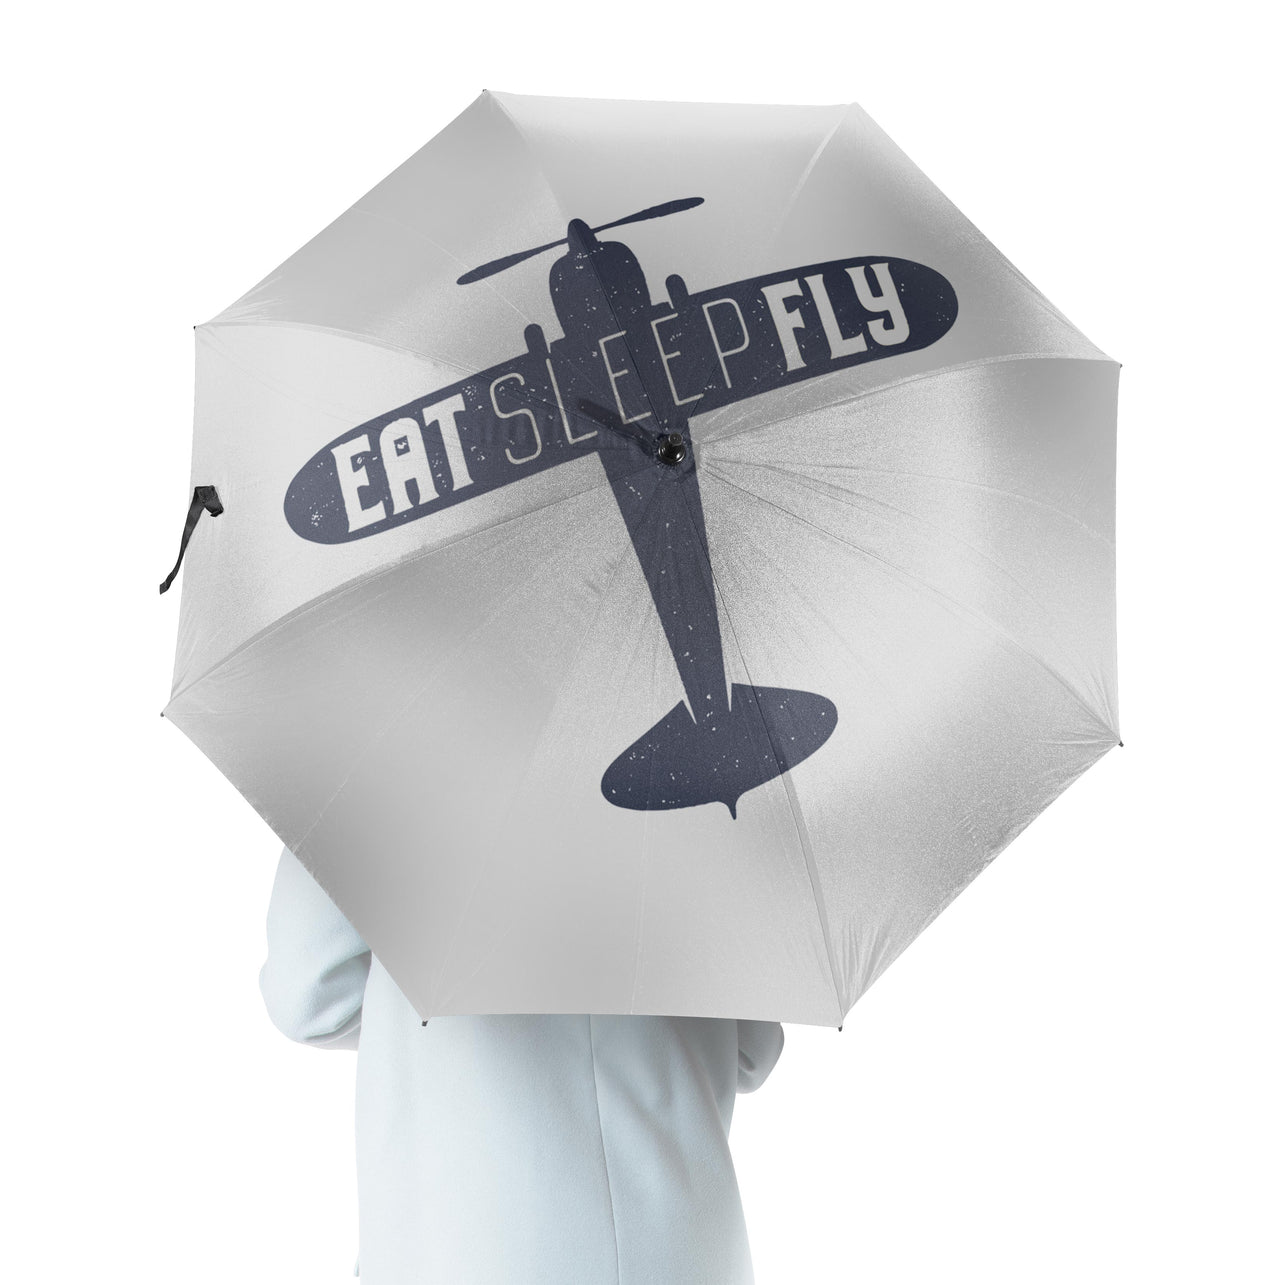 Eat Sleep Fly & Propeller Designed Umbrella